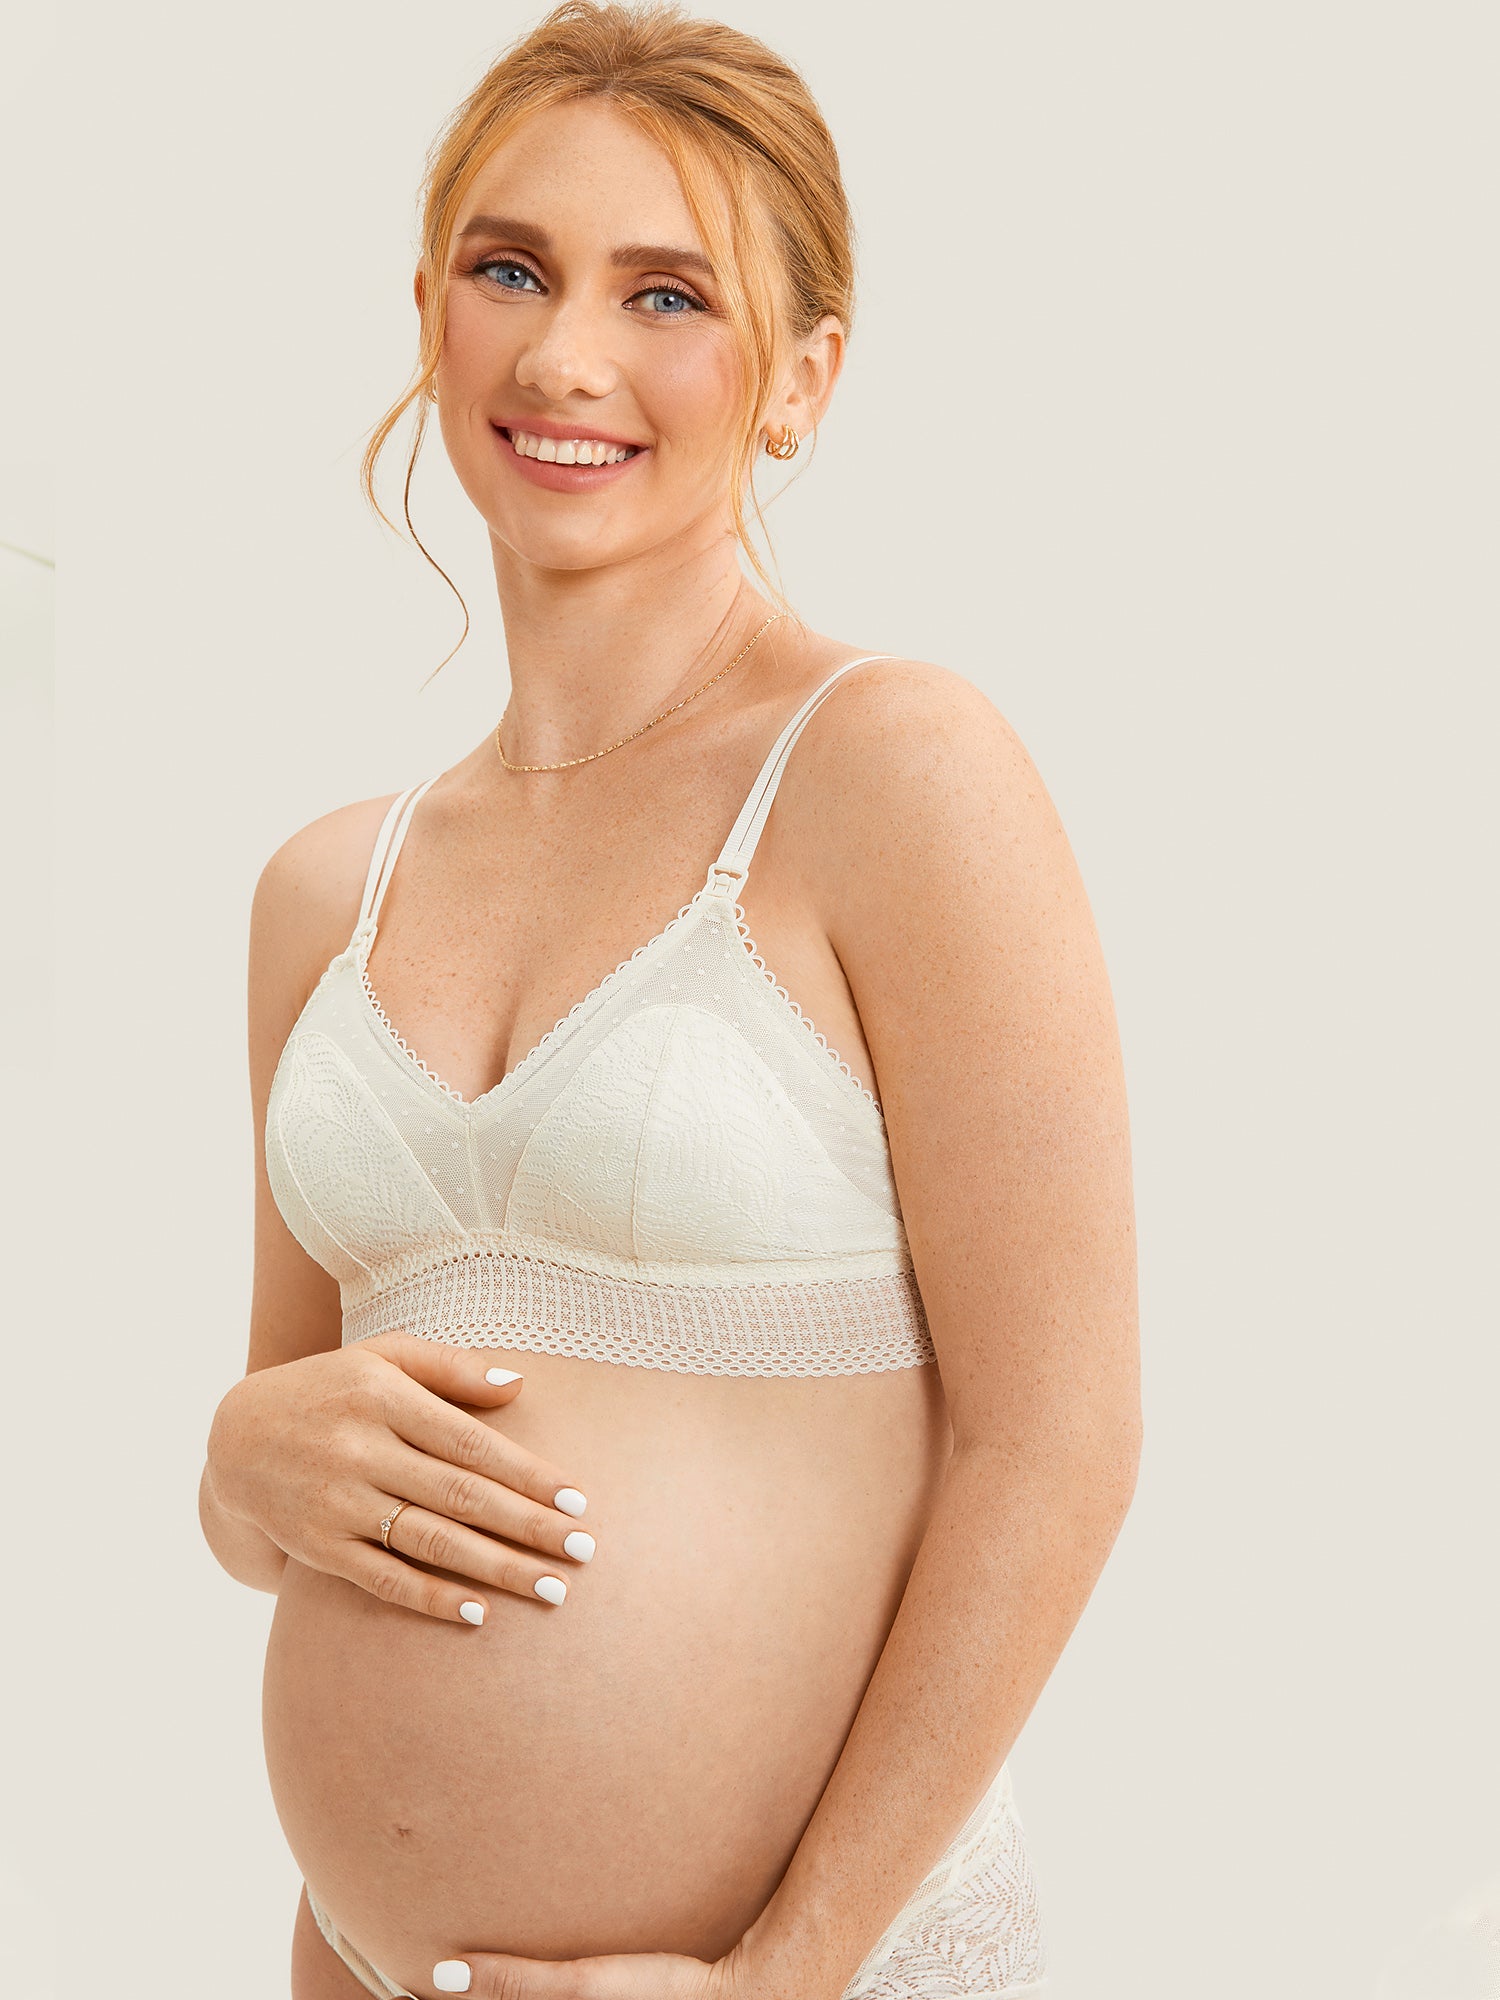 MOMANDA Hands Free Pumping Bra Breastfeeding Maternity Wireless Lace 100%  Cotton Lining Nursing Bra For Pregnant Women A131